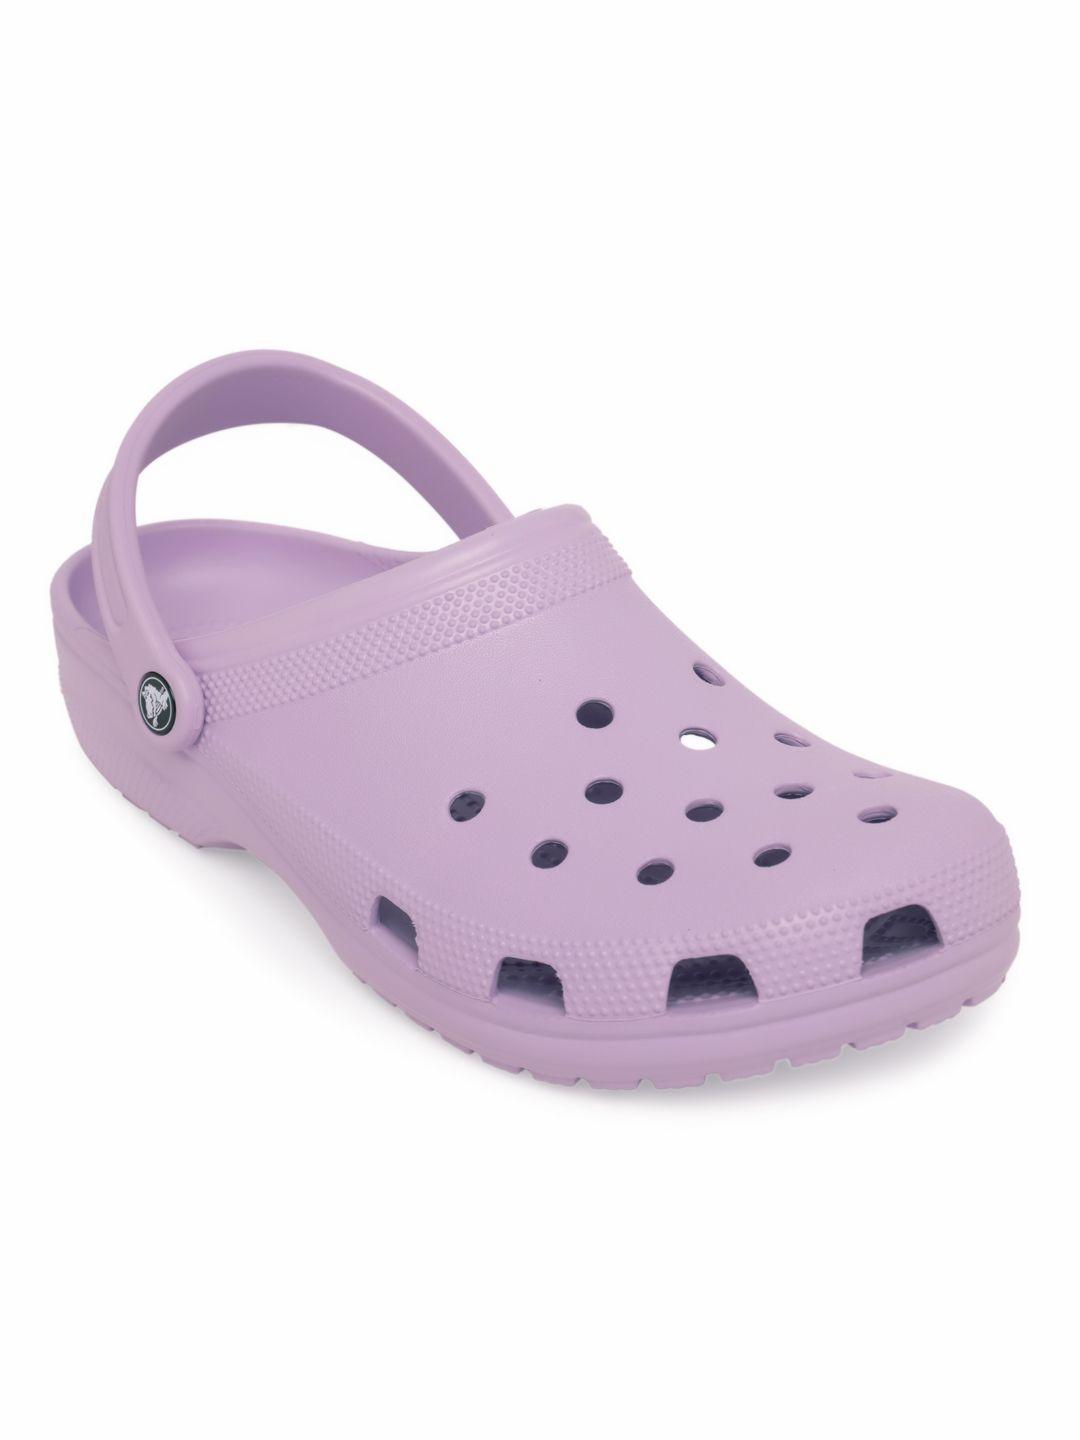 crocs unisex purple classic clogs